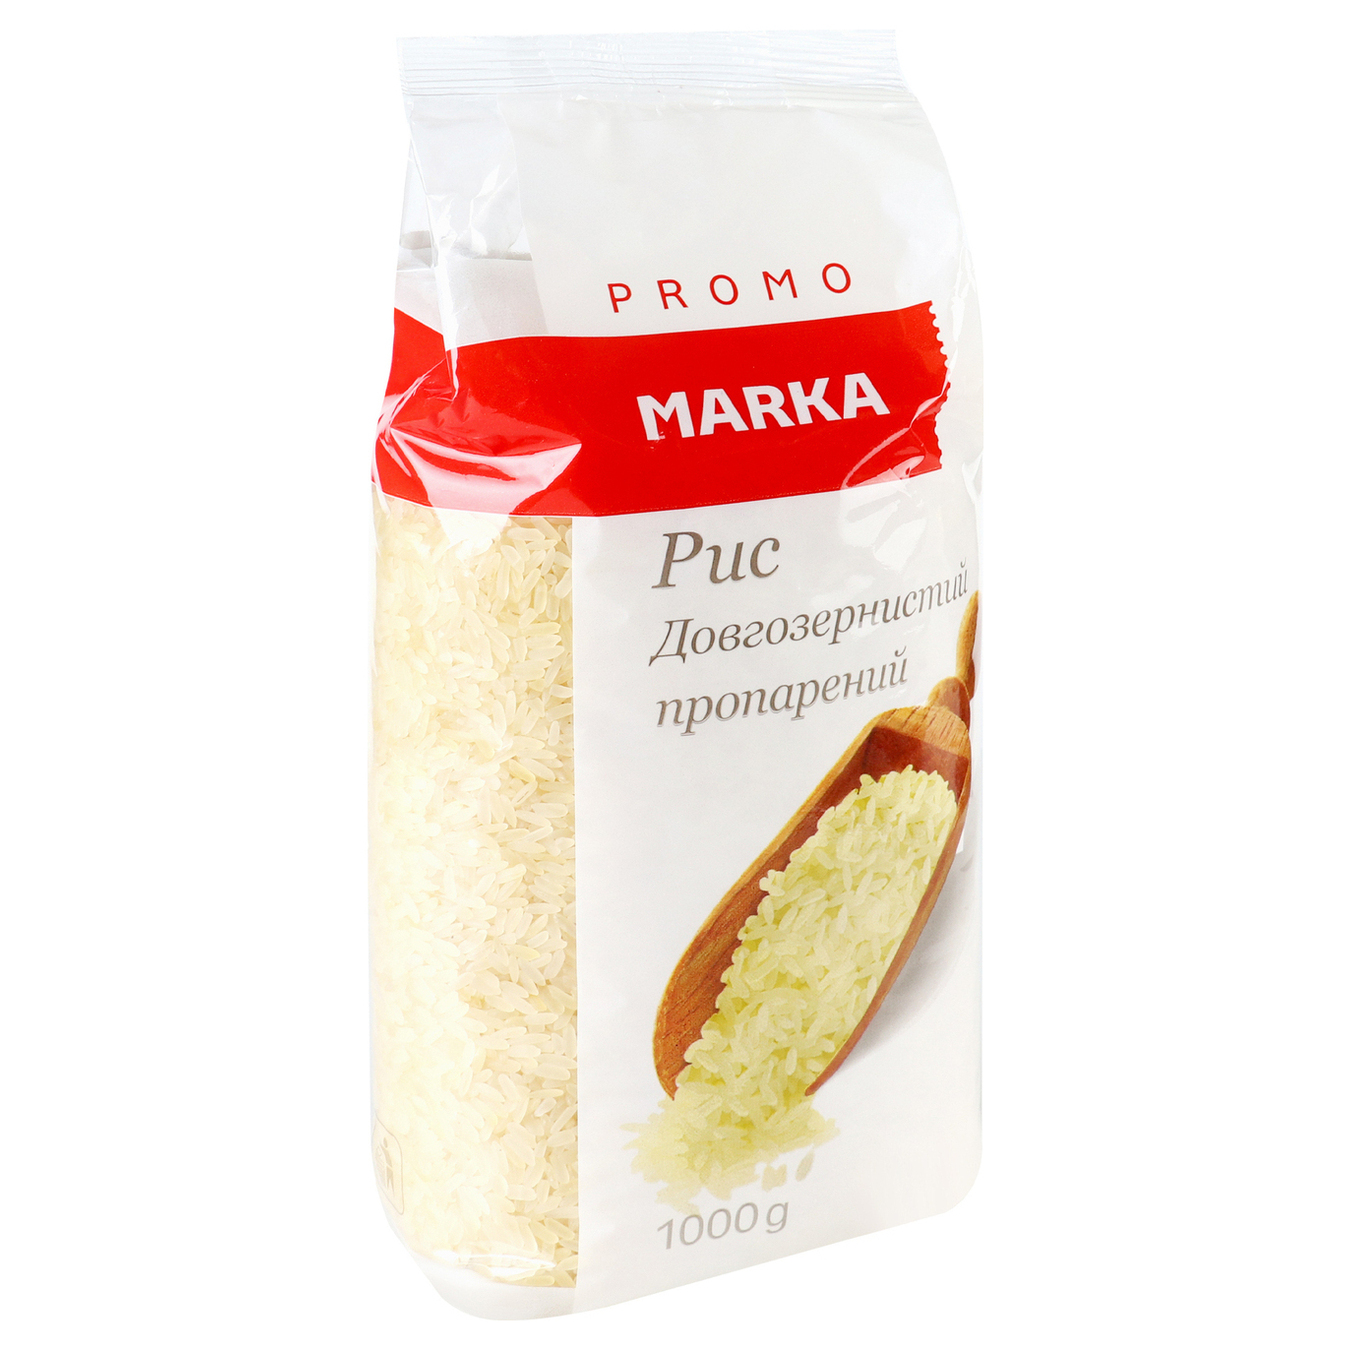 Rice Marka Promo long grain steamed 1kg 2